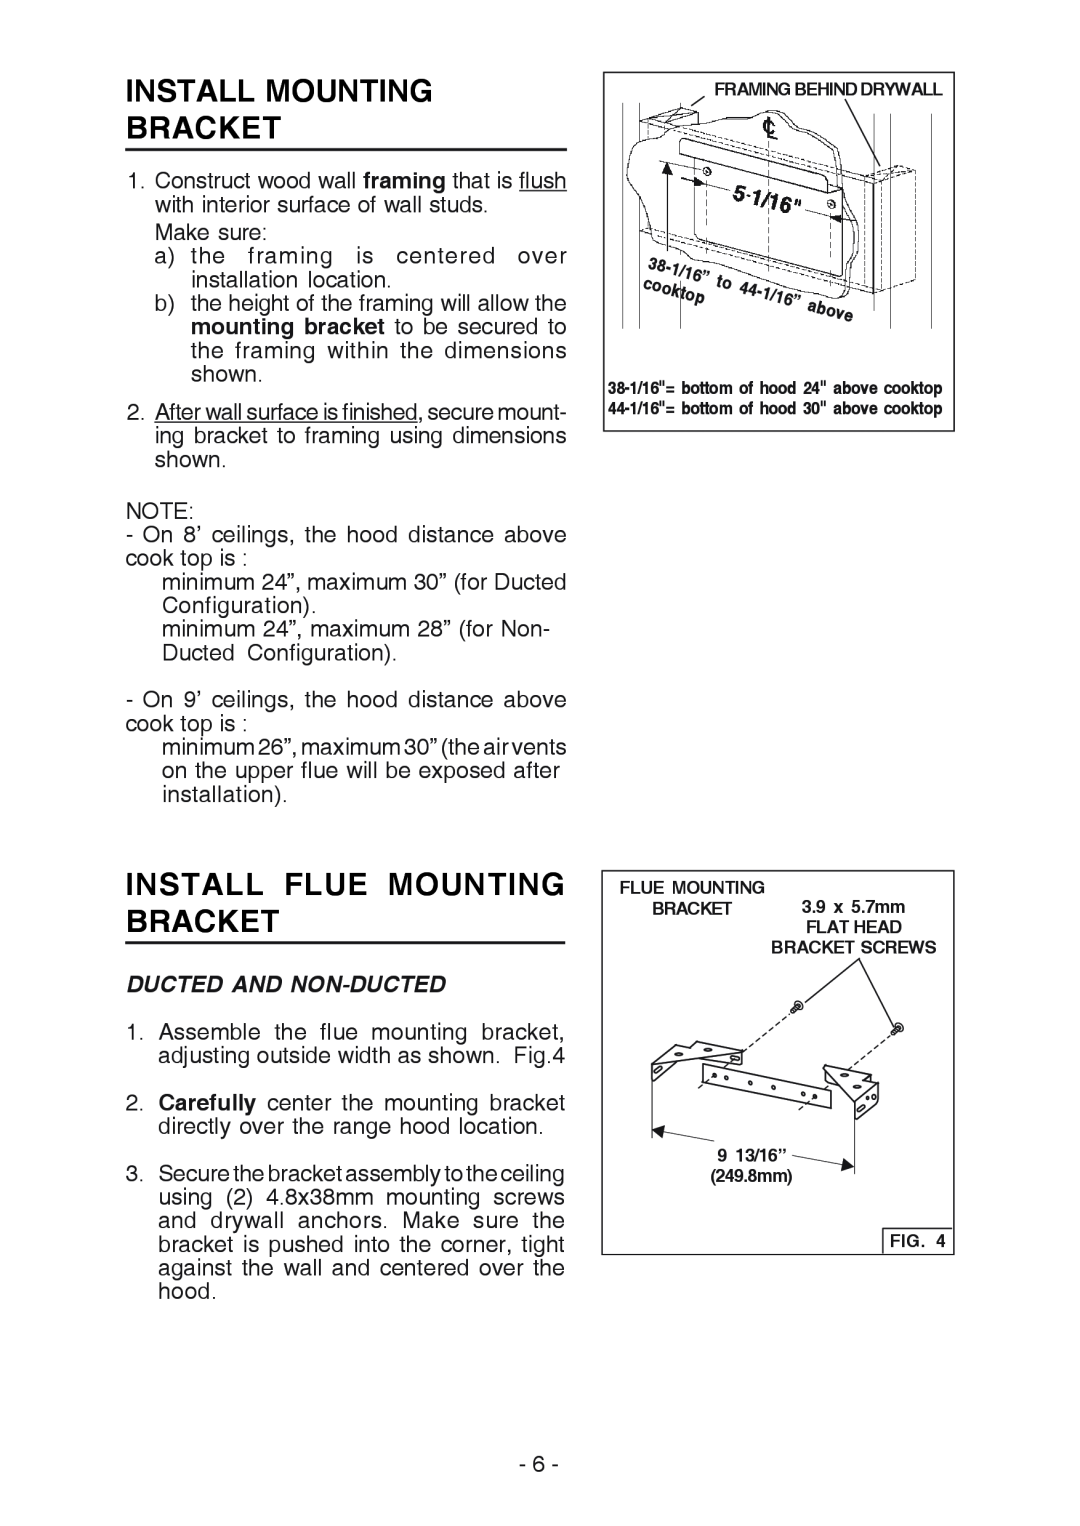 Broan RM523004, RM524204 manual Install Mounting Bracket, Install Flue Mounting Bracket, Ducted And Non-Ducted 